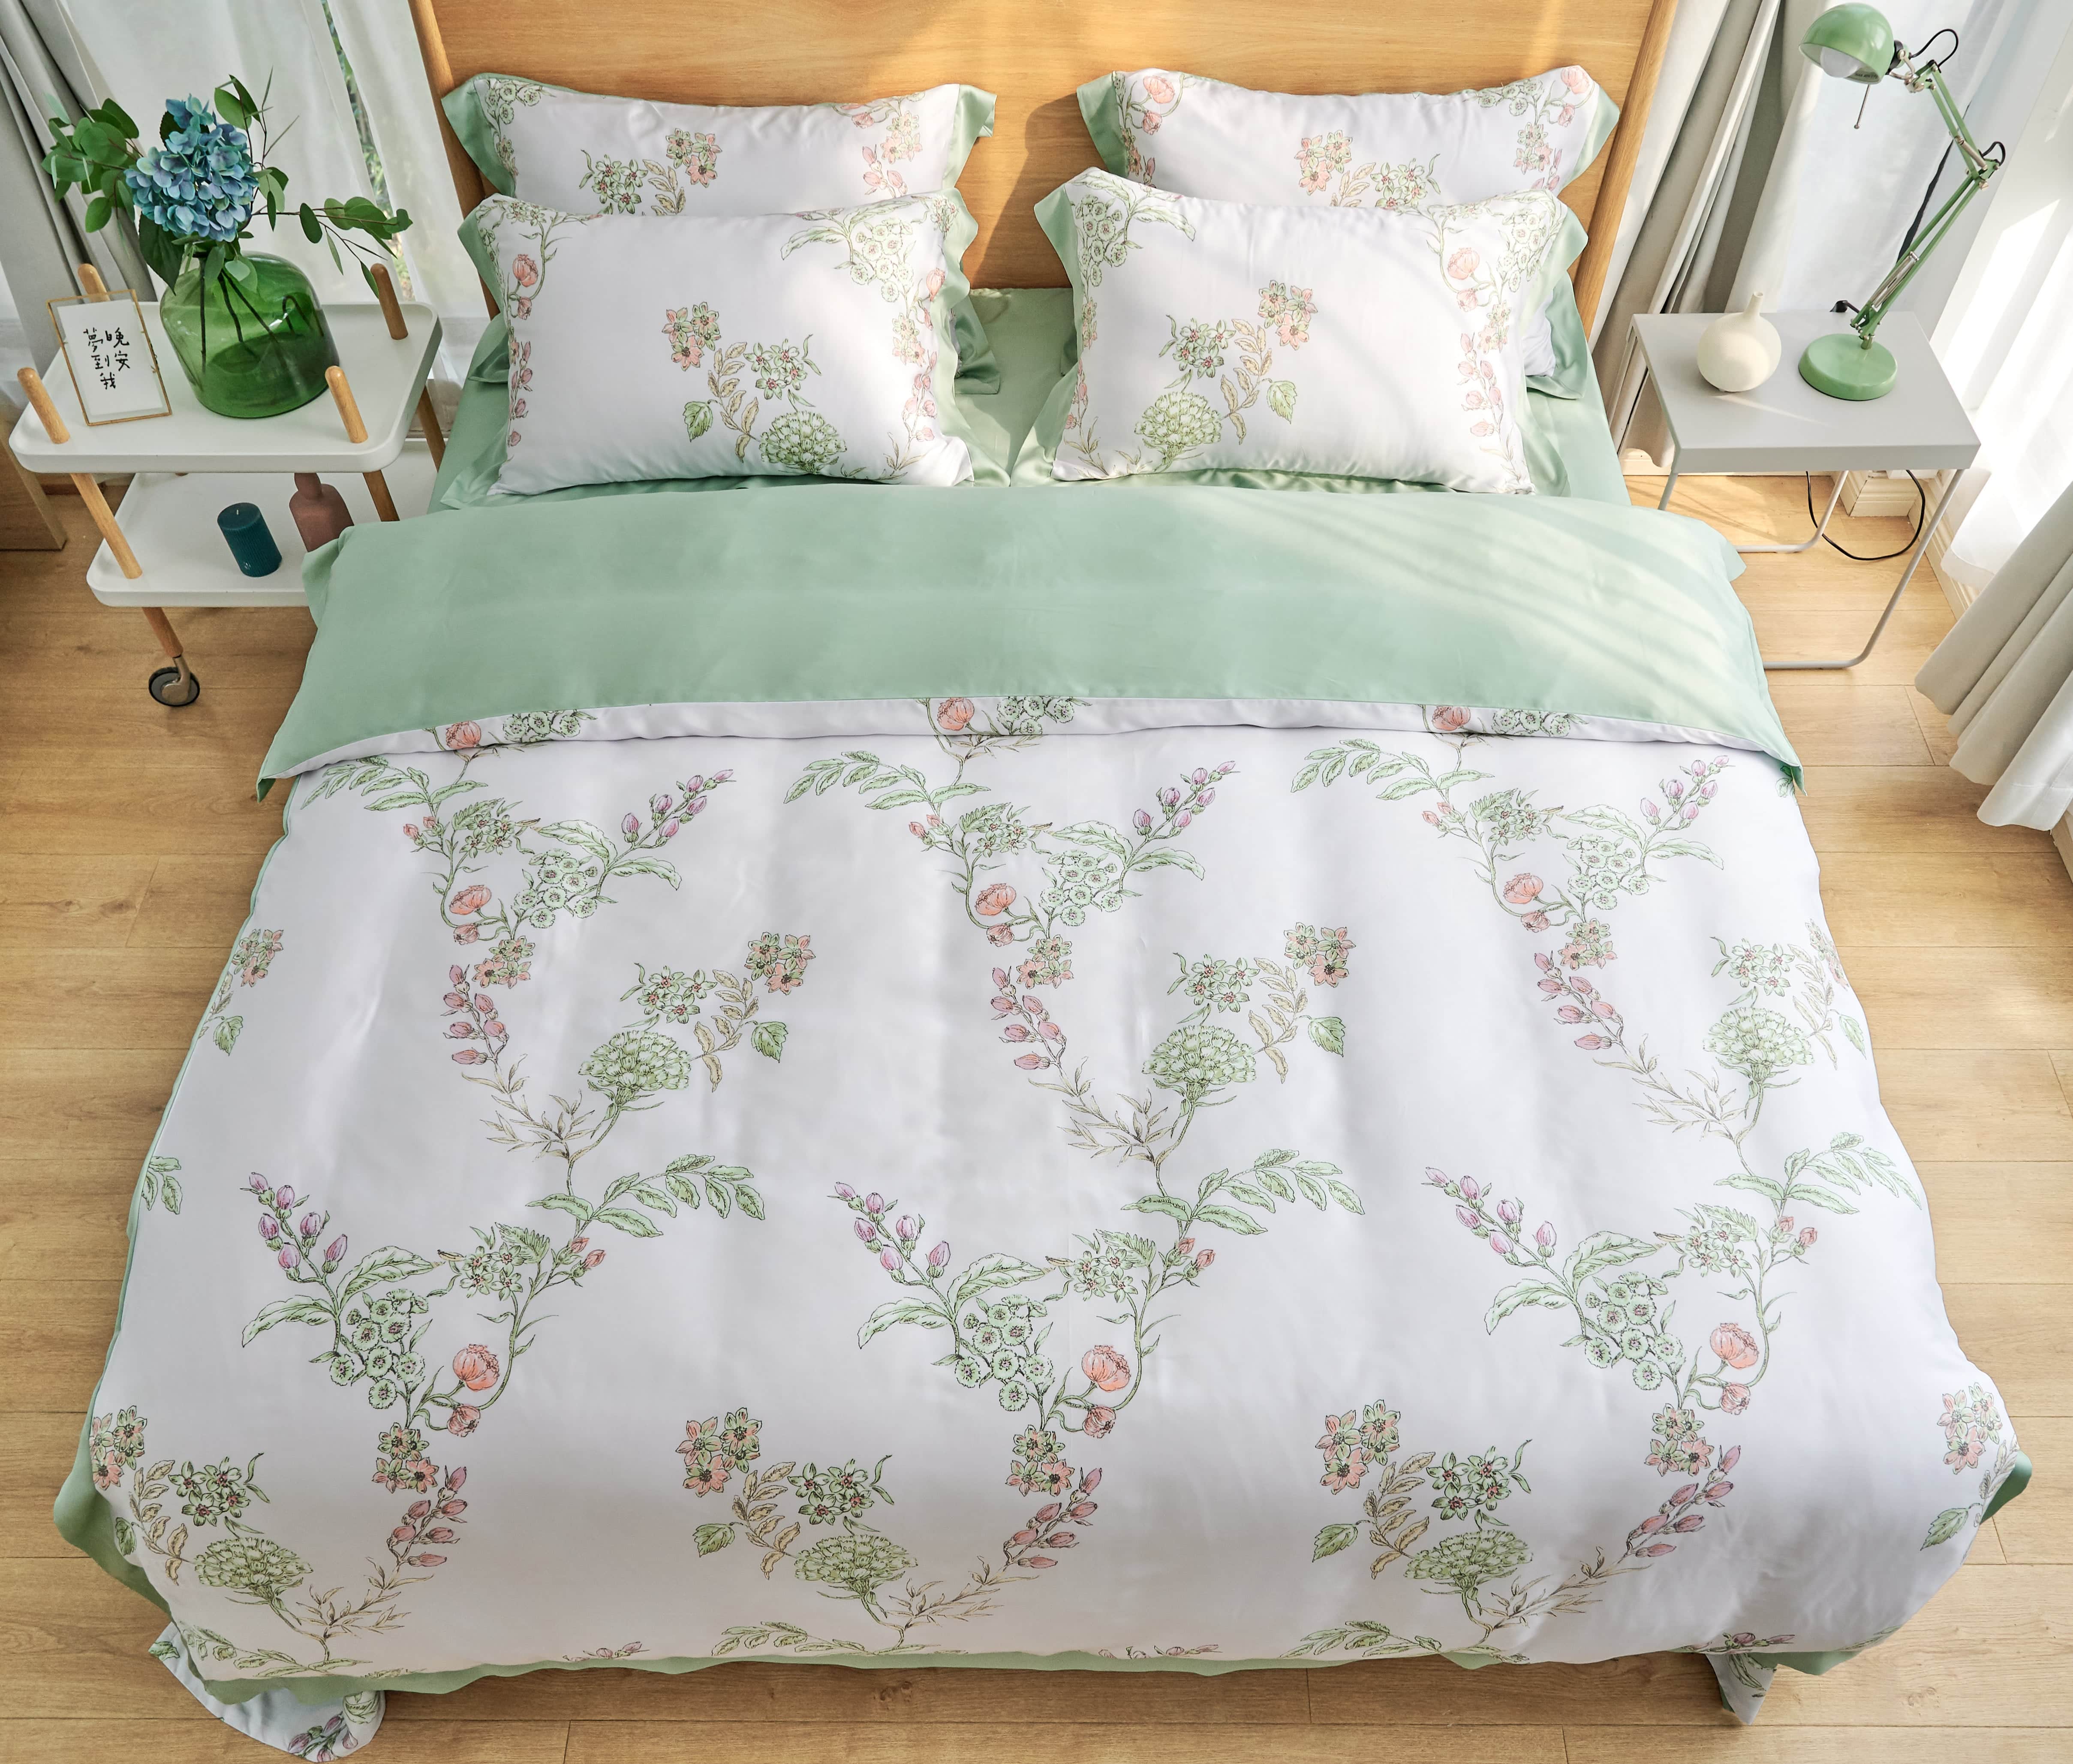 Super Soft Comforter Tencel Lyocell 4 Pcs Bedding Set